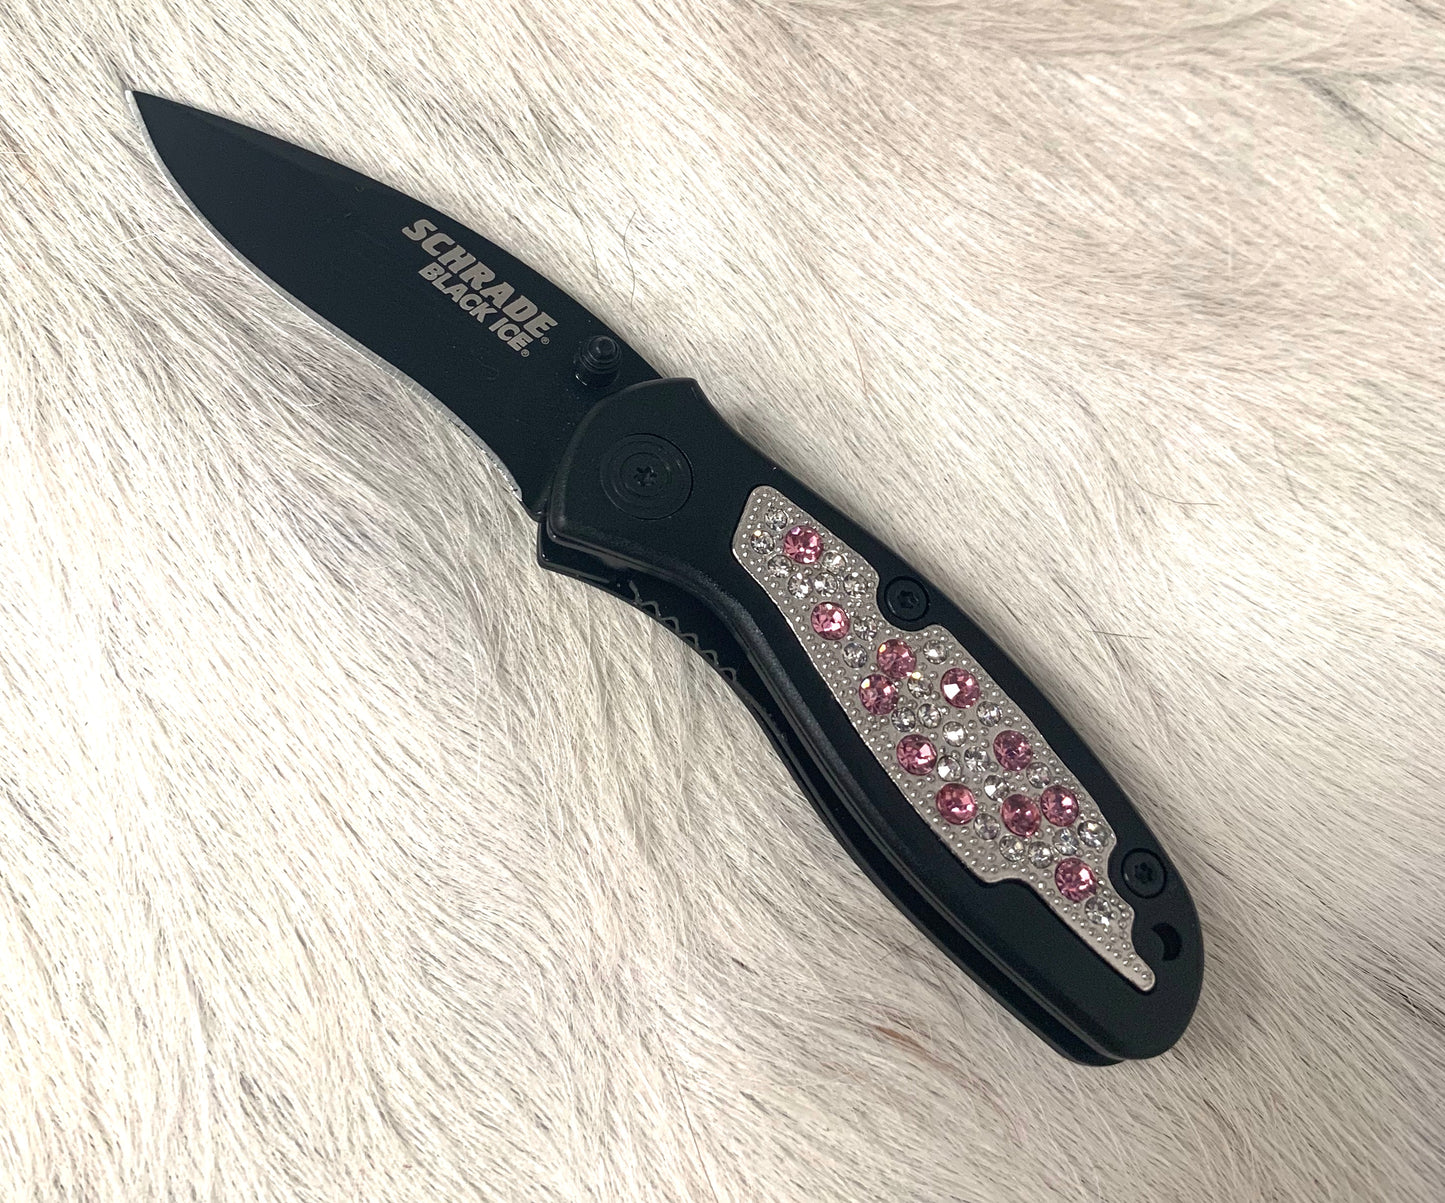 SCBLINGSP Western Fashion Pink Rhinestone Black Steel Knife